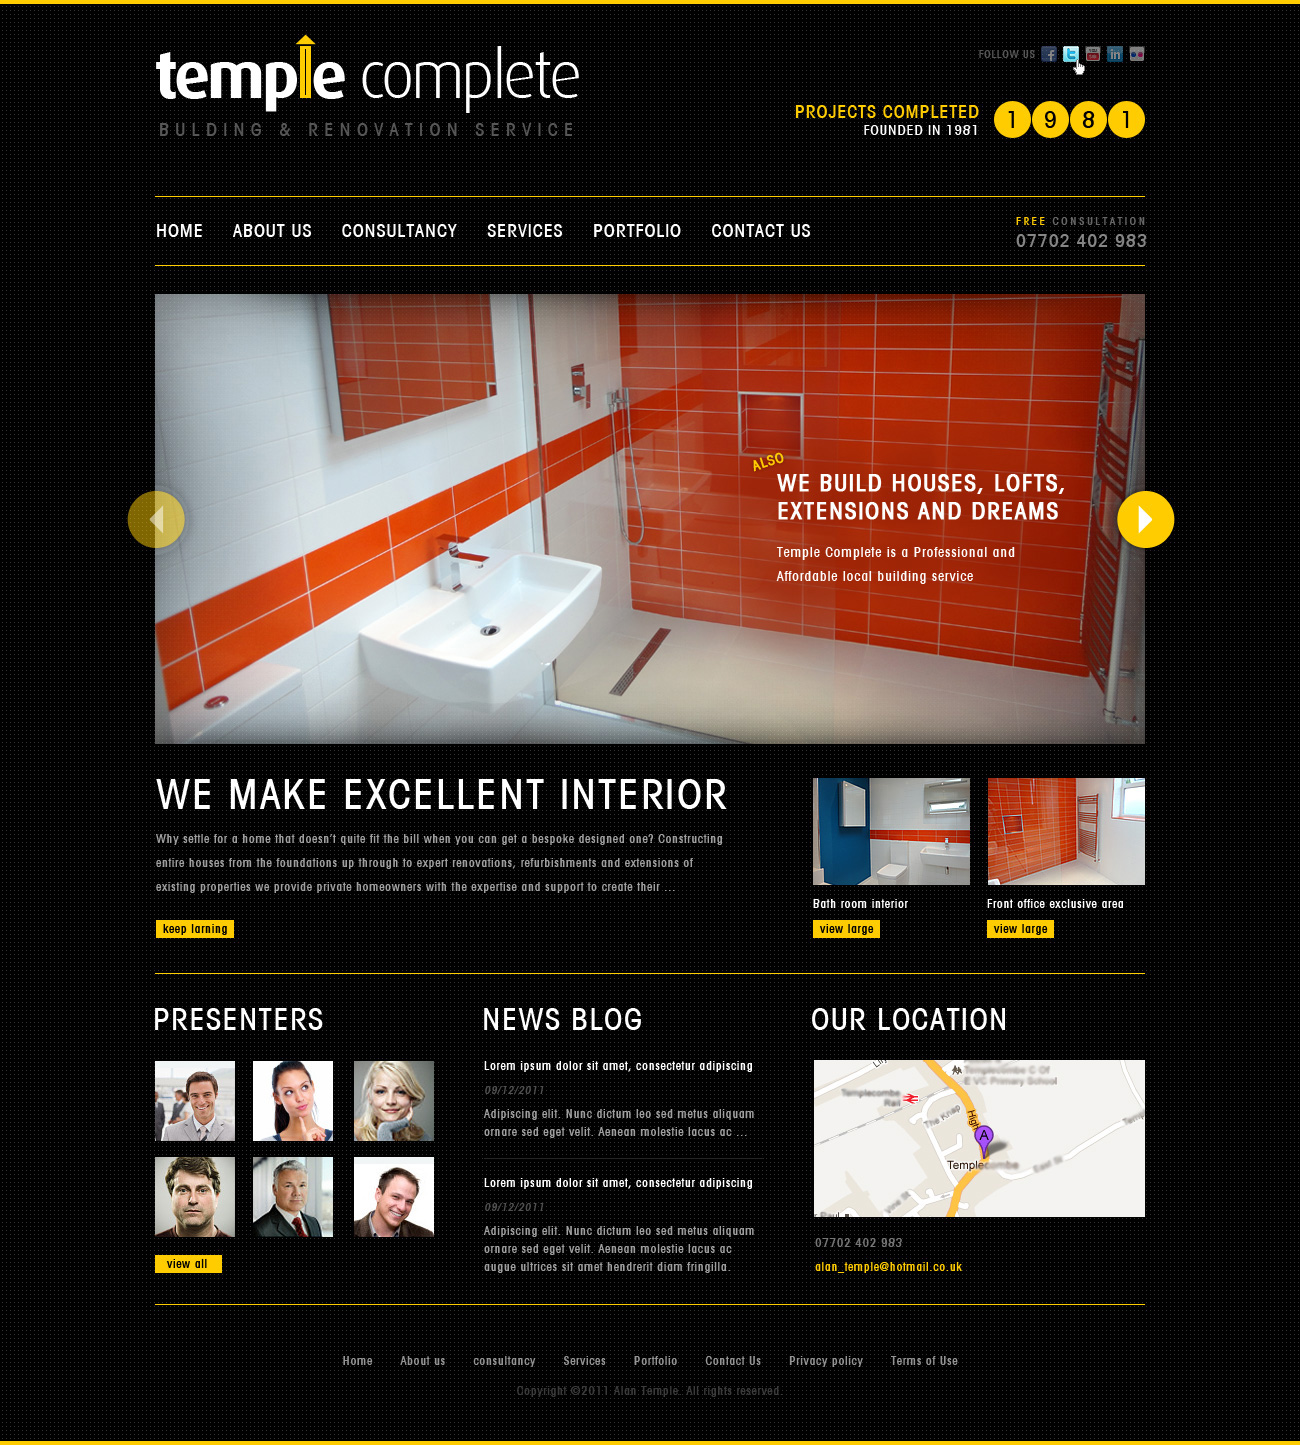 Templecomplete website